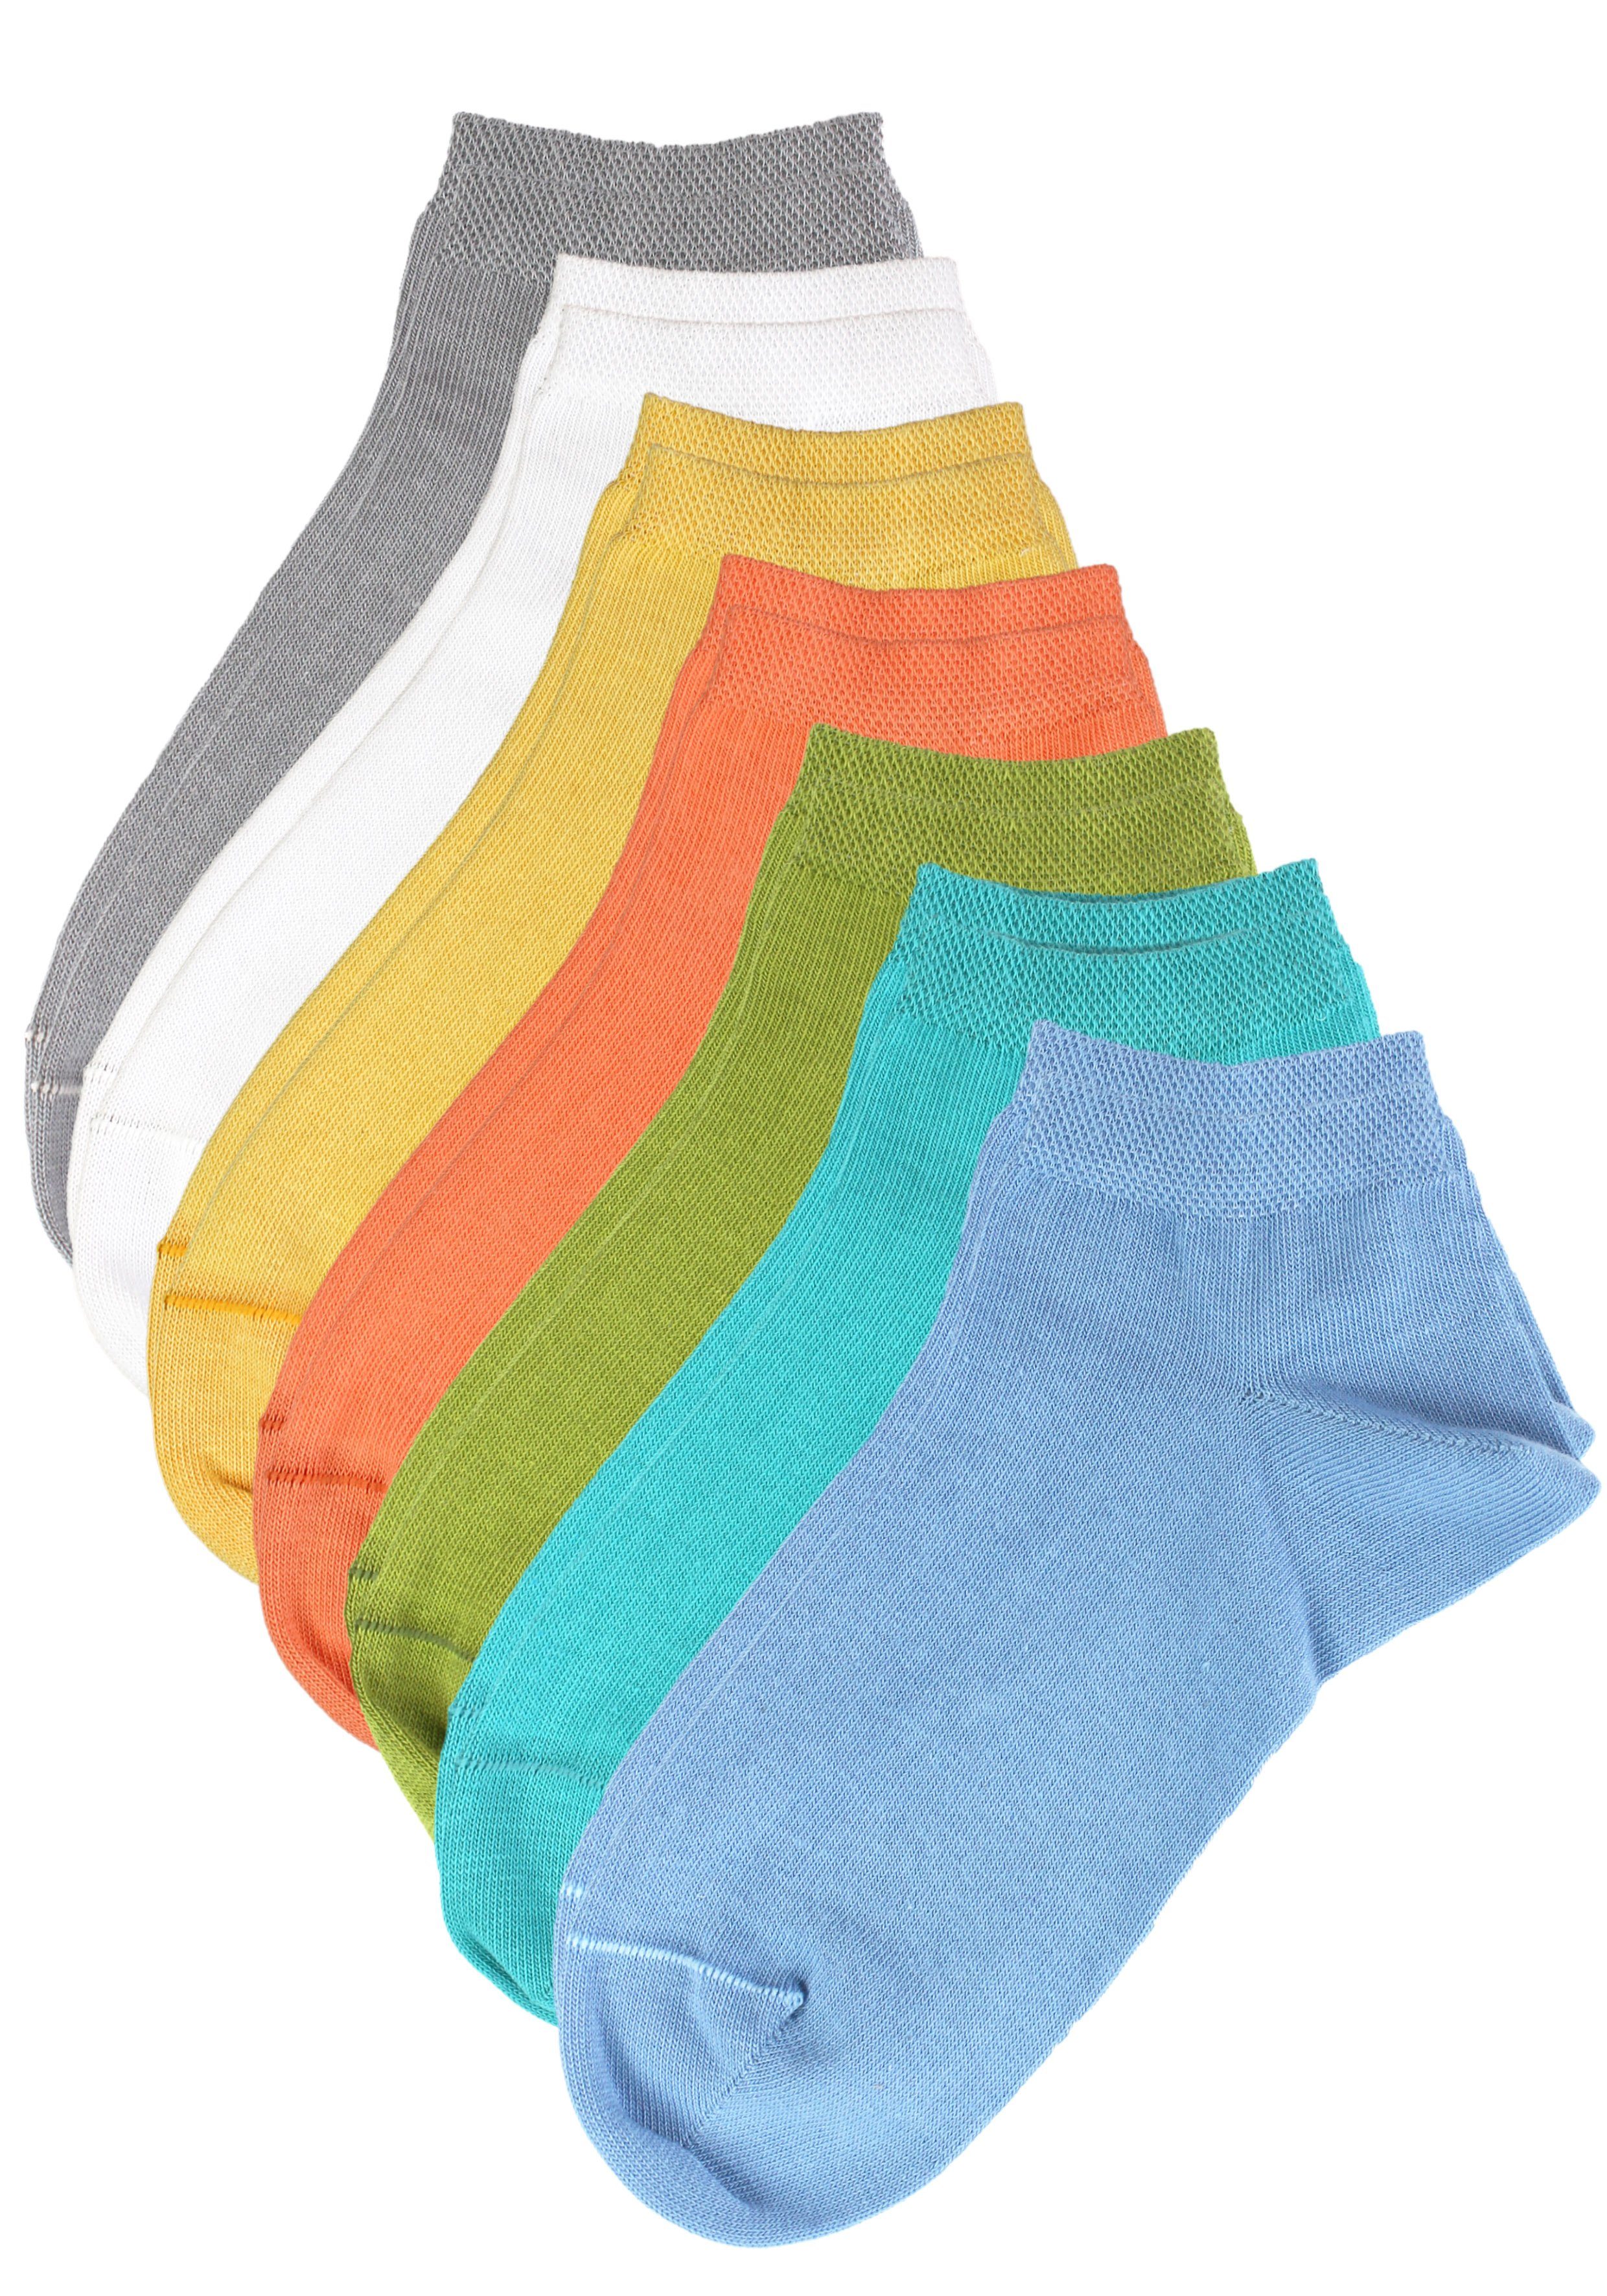 Rogo Socken 7 Paar (7-Paar) in fröhlichen Farben